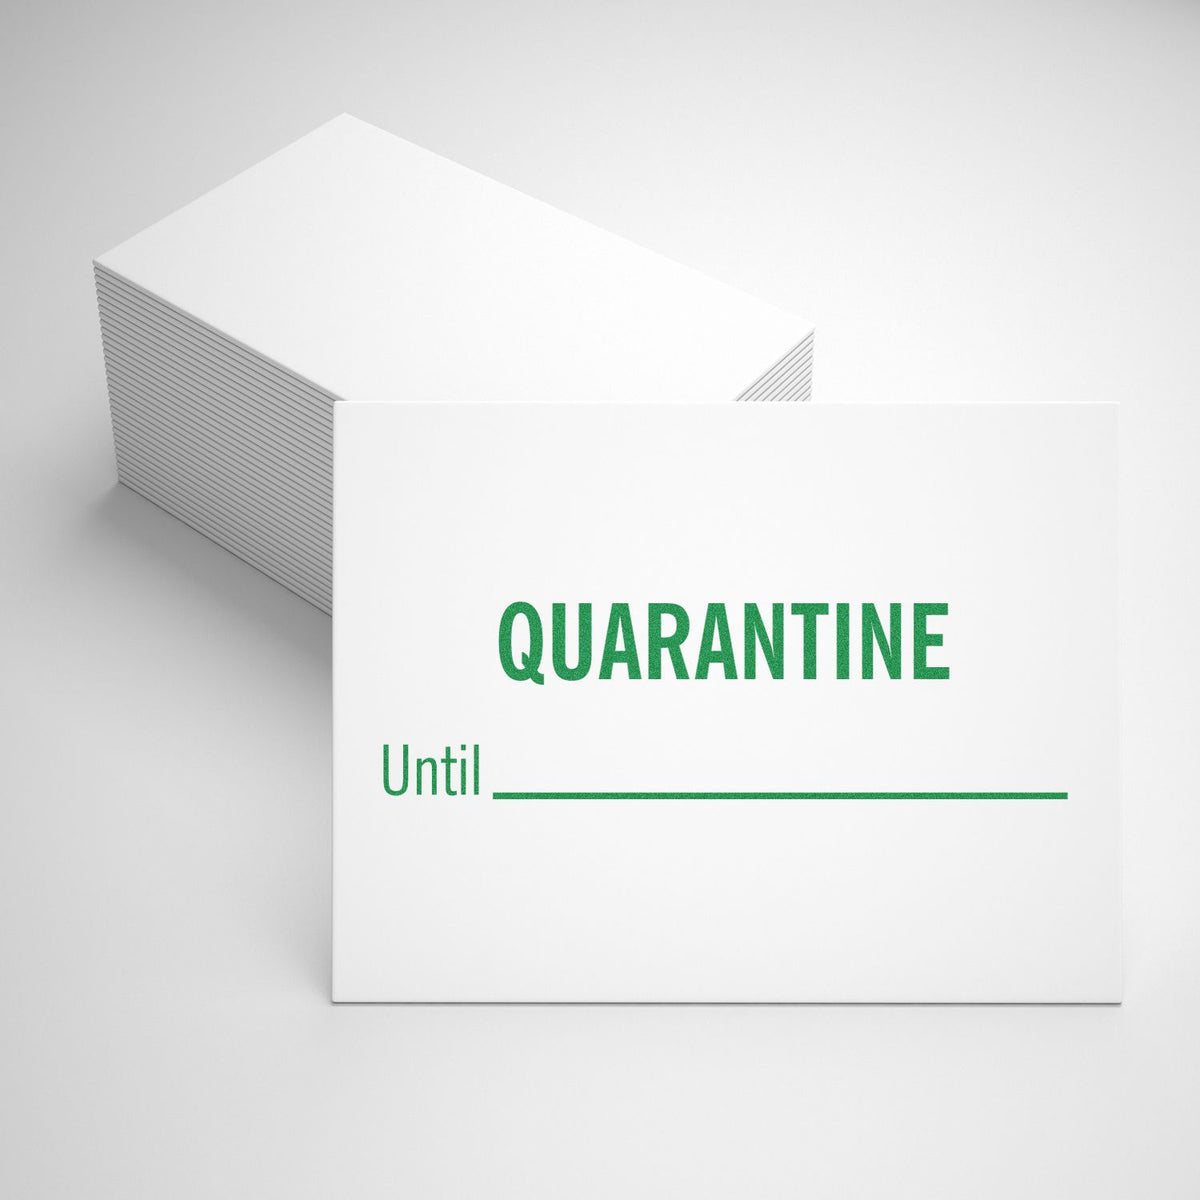 Large Quarantine Until Rubber Stamp In Use